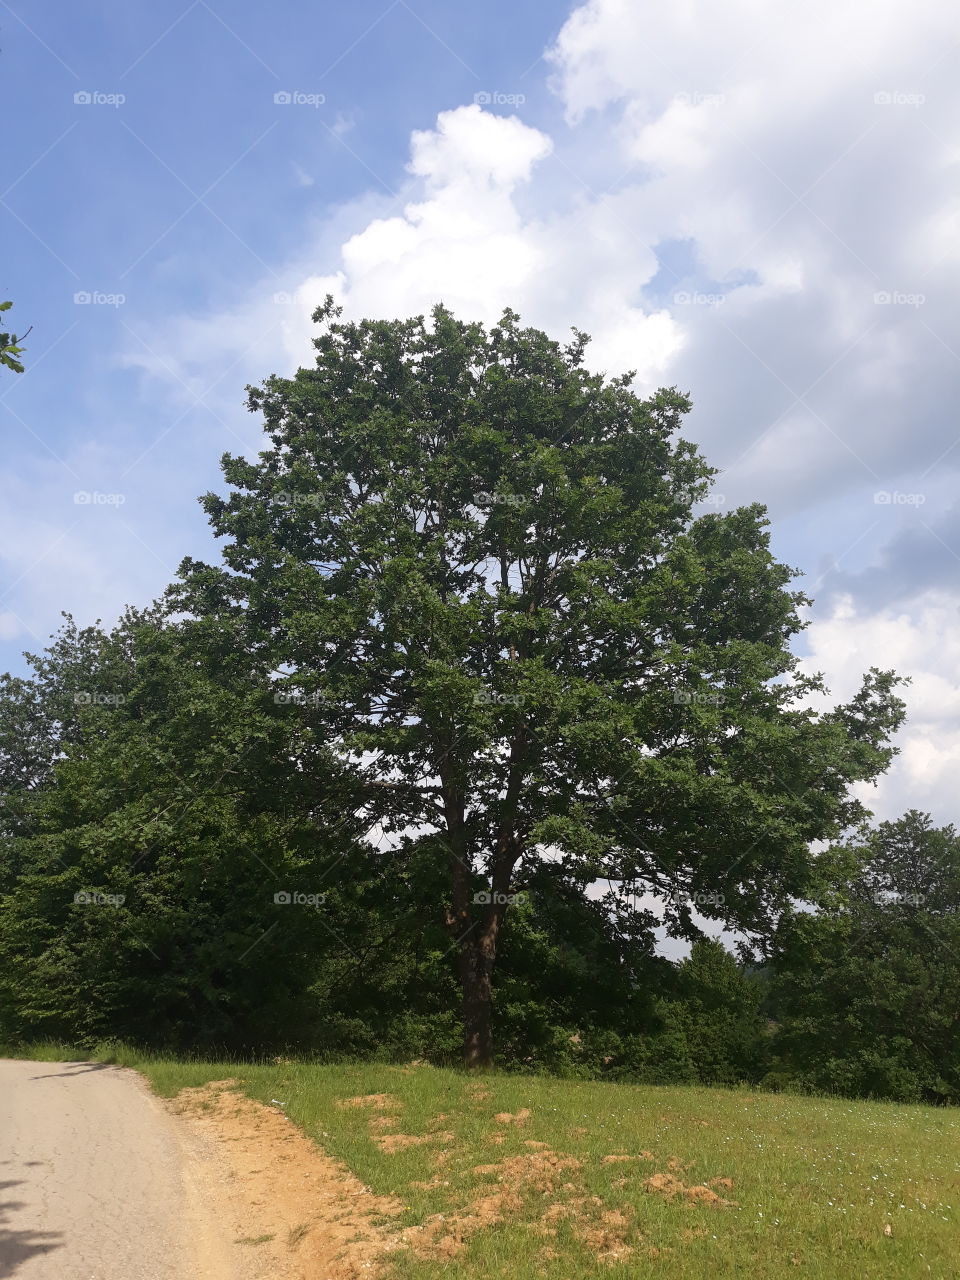 Young oak tree